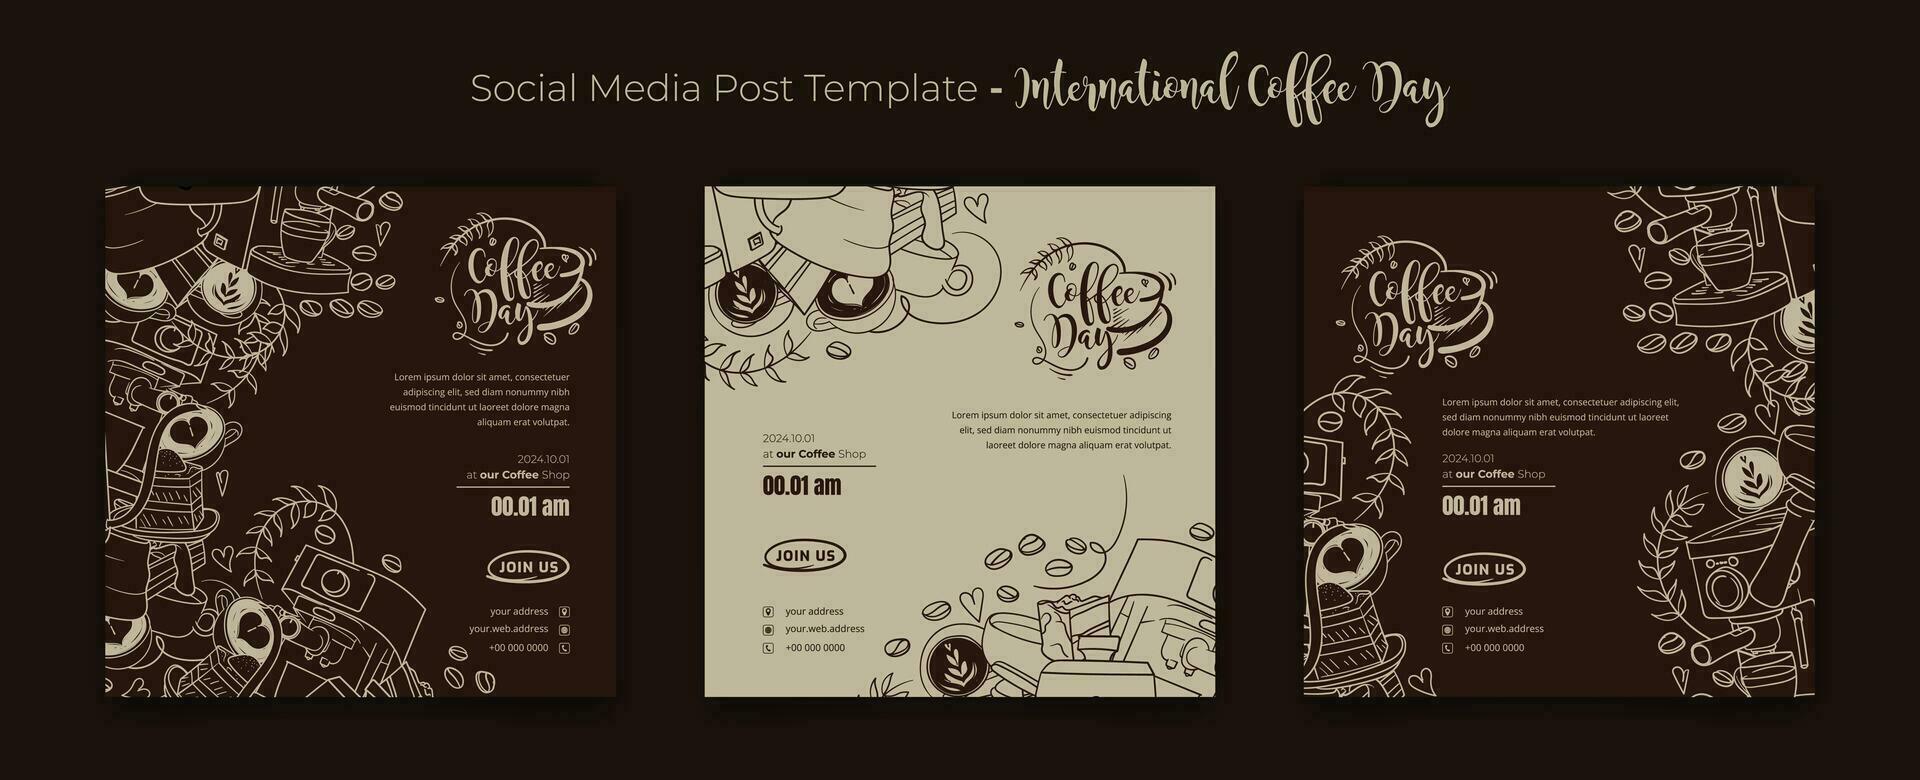 Internationale koffie dag banier campagne in tekening kunst van koffie achtergrond ontwerp vector